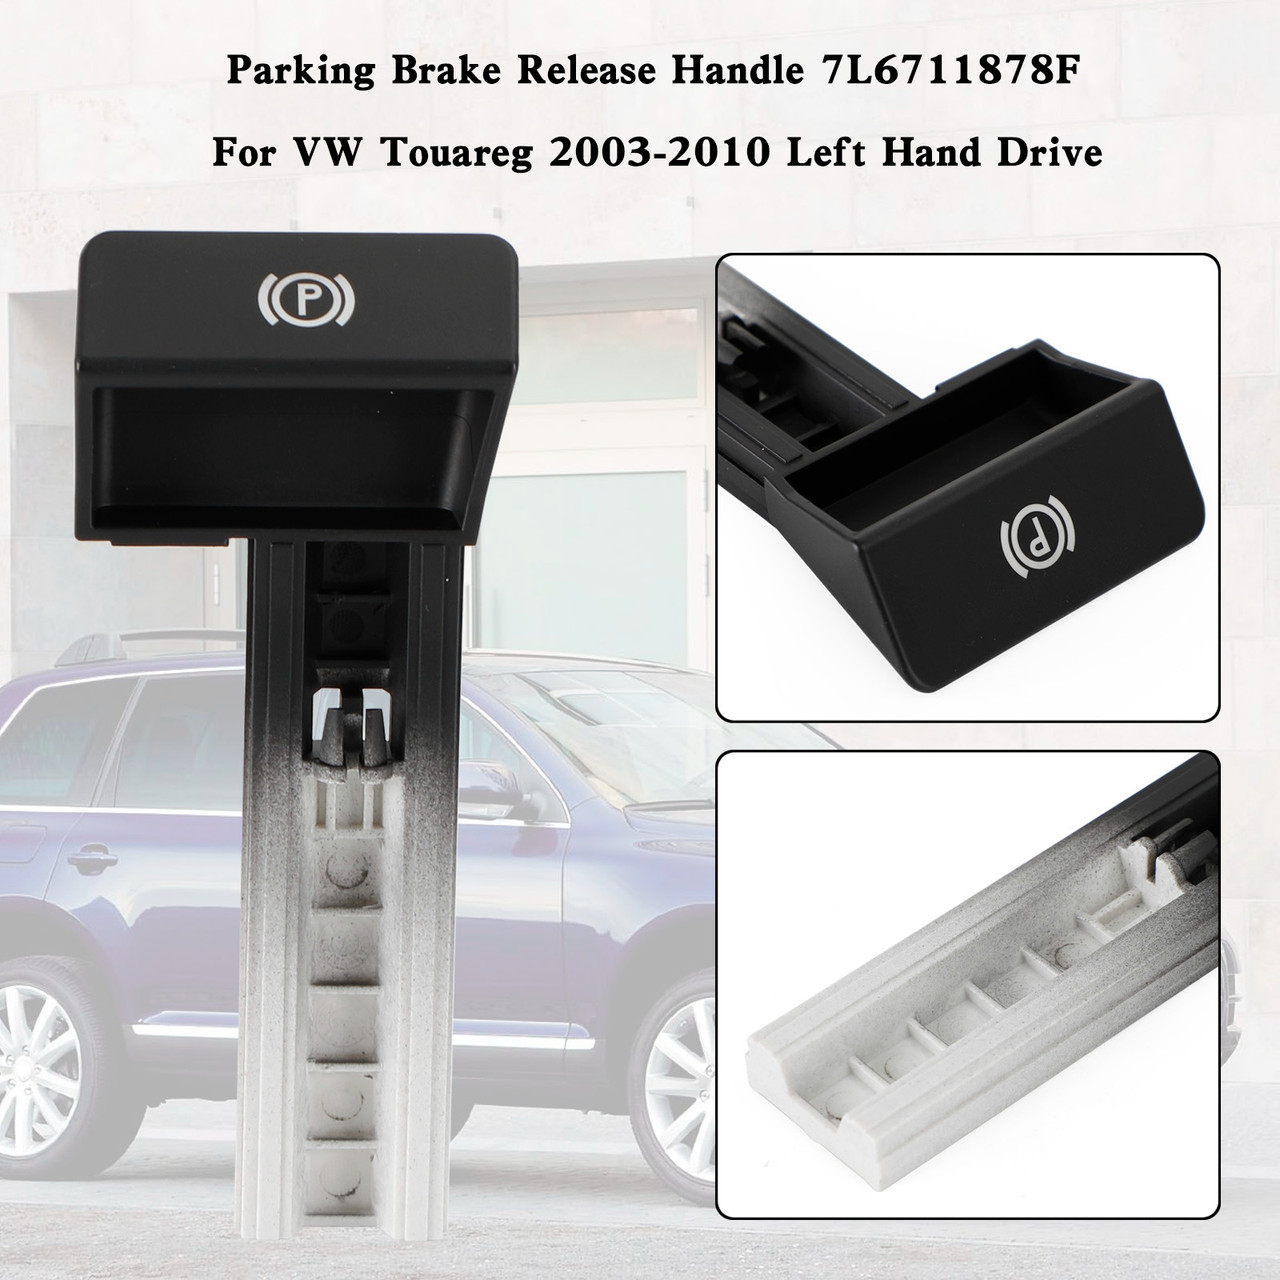 Parking Brake Release Handle 7L6711878F For VW Touareg 2003-2010